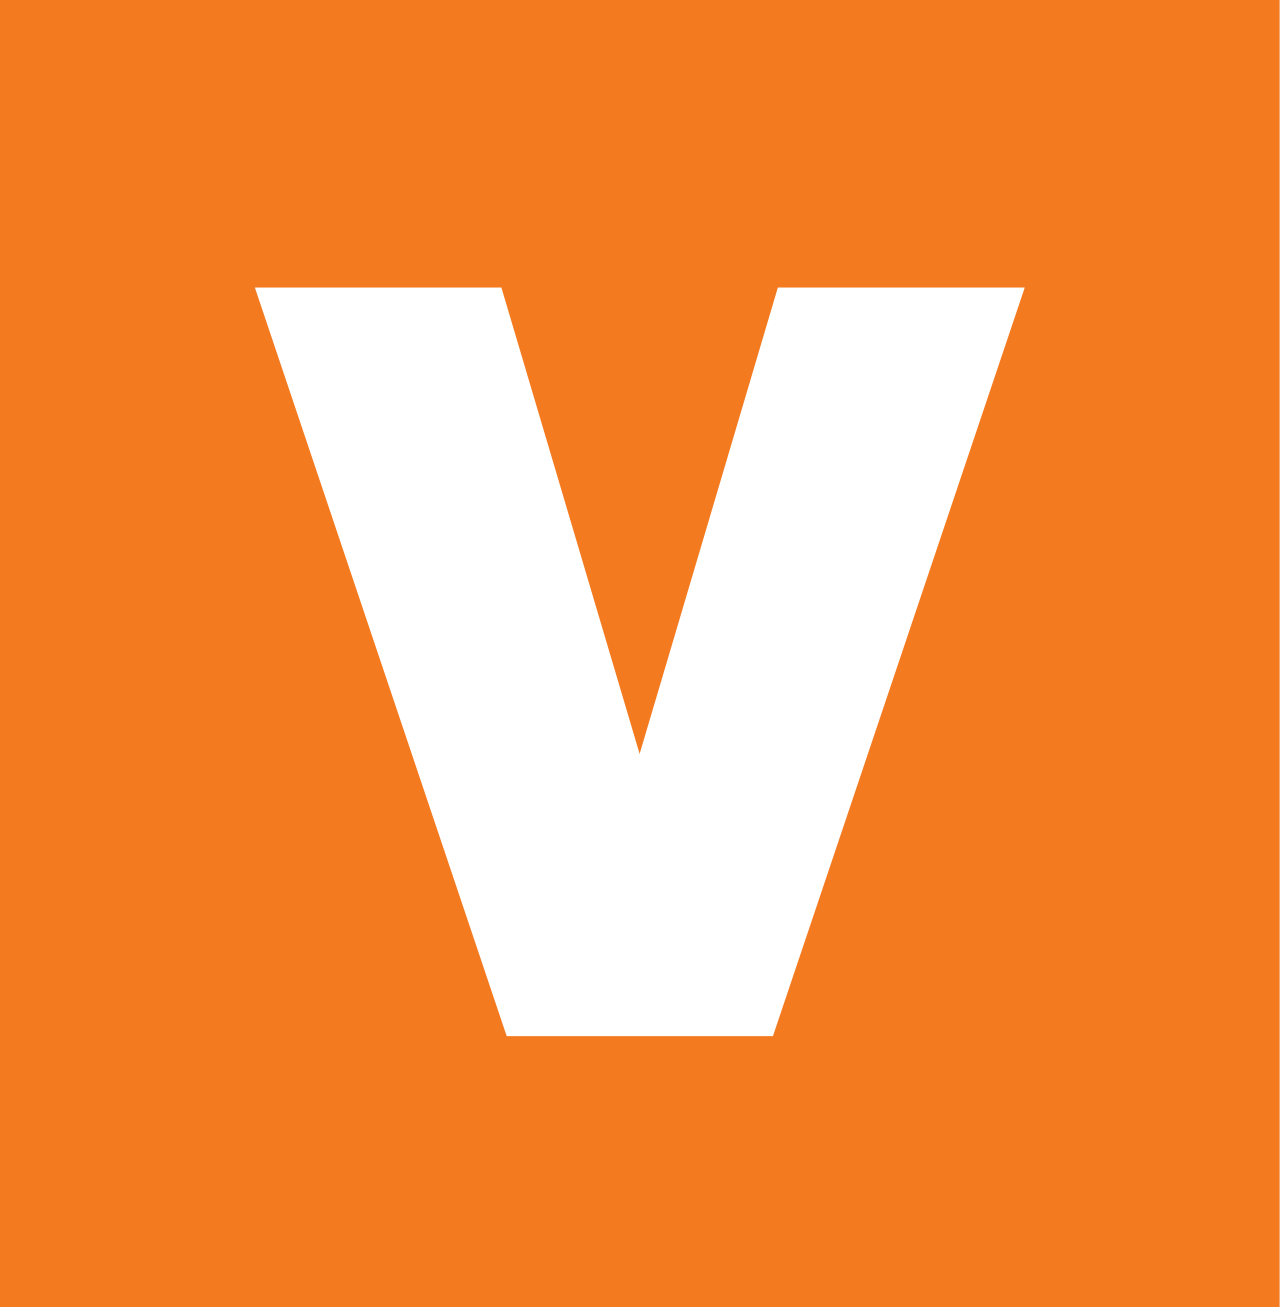 Logo 5 4. Буква v. Логотип v. Логотип с буквой v.